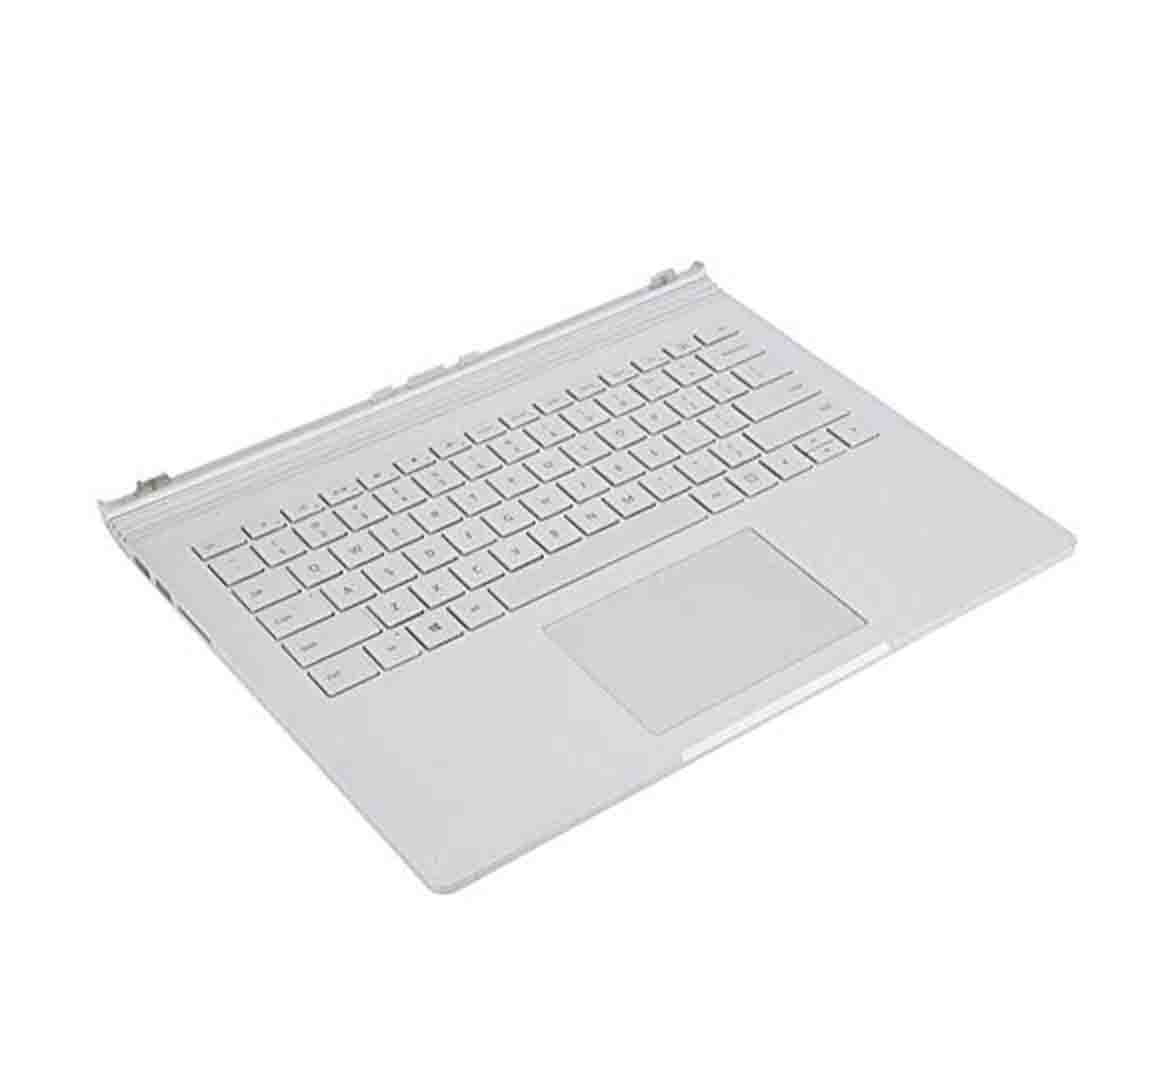 Microsoft Surface Book 1 Business Laptop, Intel Core i5-6th Gen 